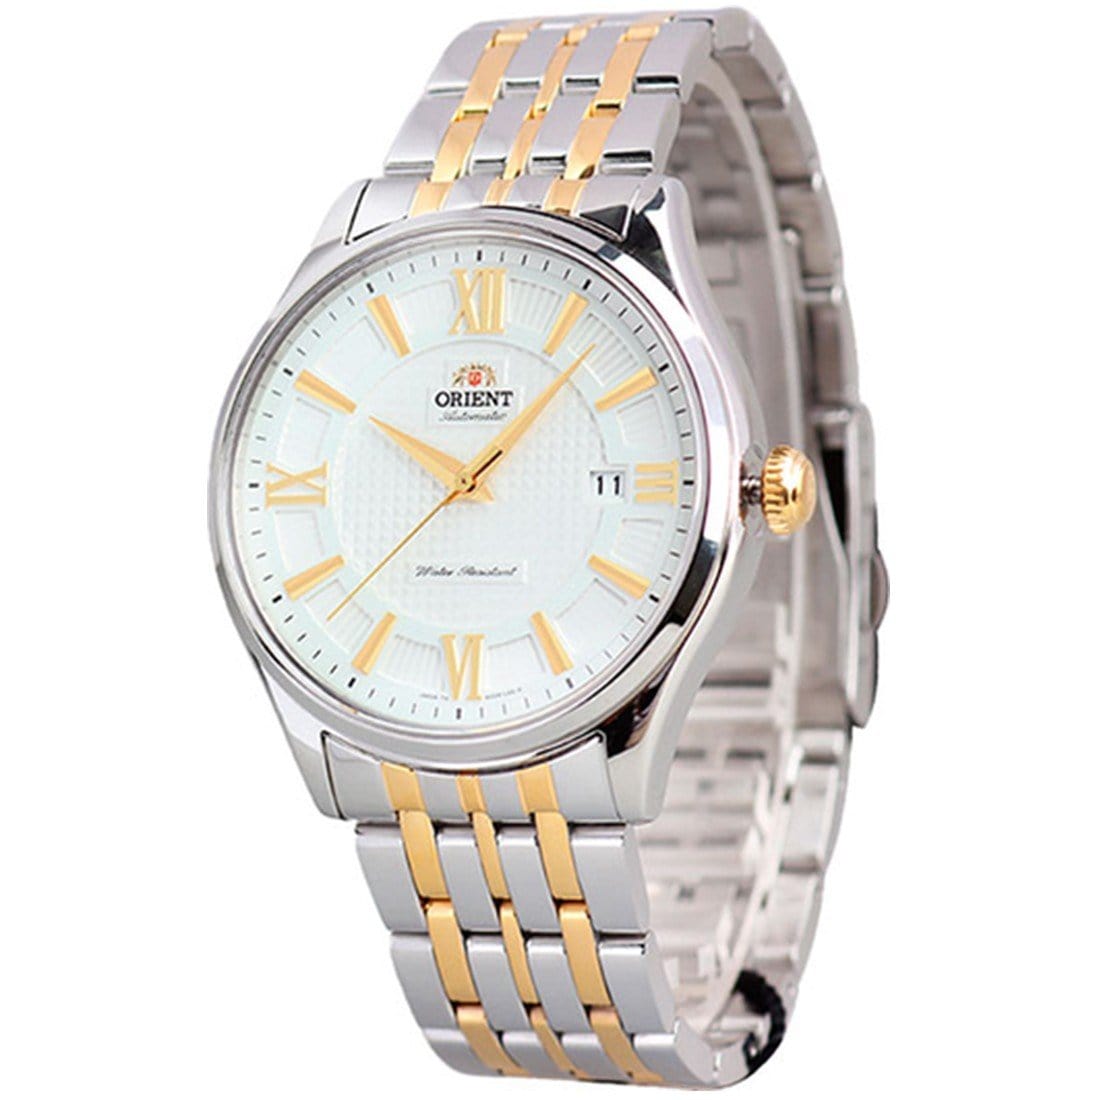 SAC04001W0 Orient Classic Automatic Male Watch